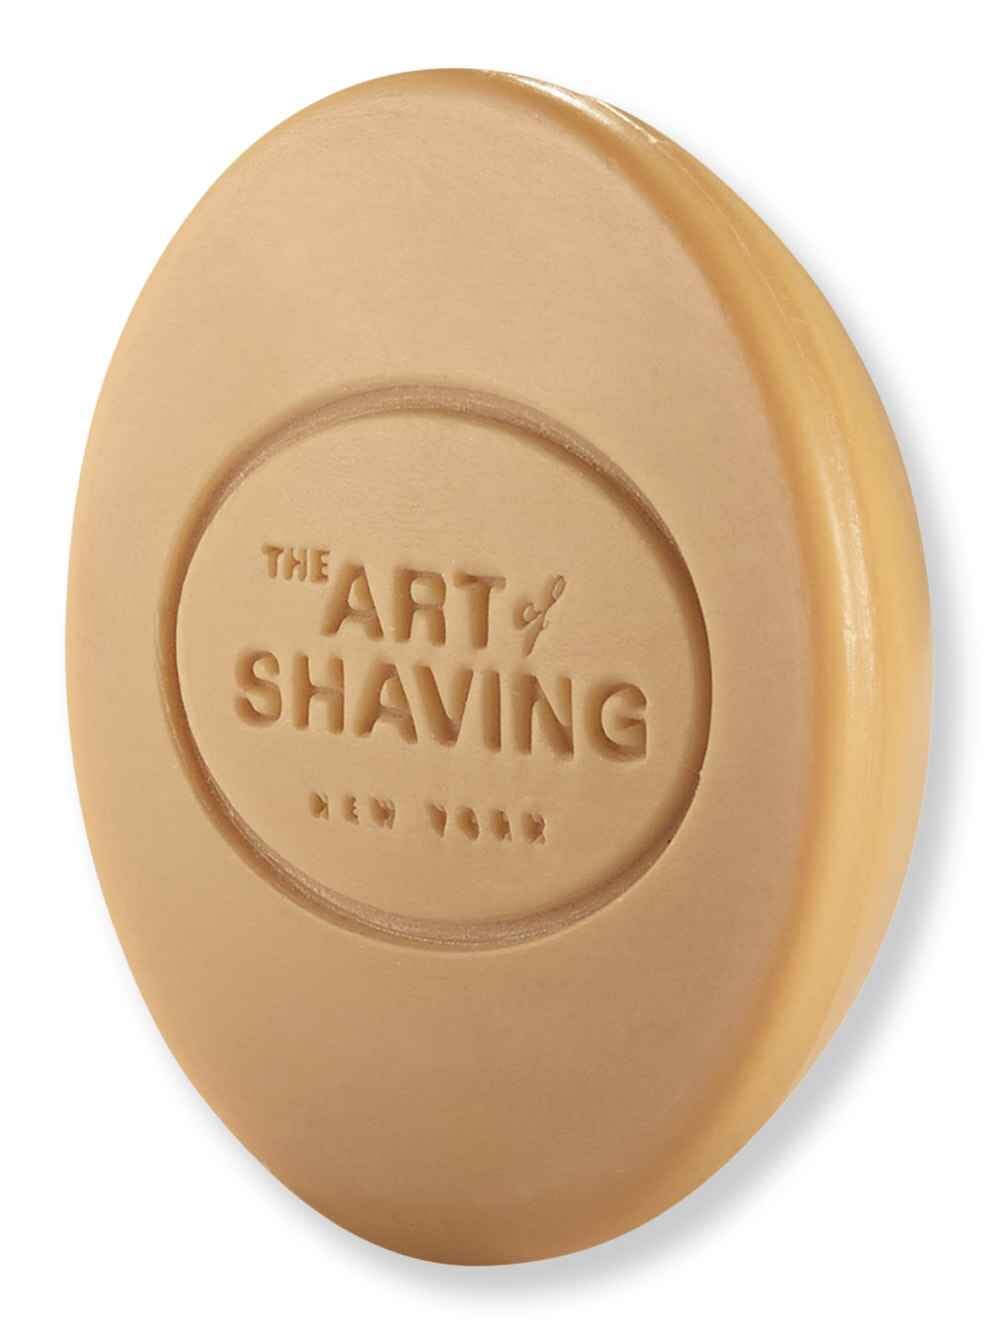 The Art of Shaving The Art of Shaving Shaving Soap Refill Sandalwood 95 g Shaving Creams, Lotions & Gels 